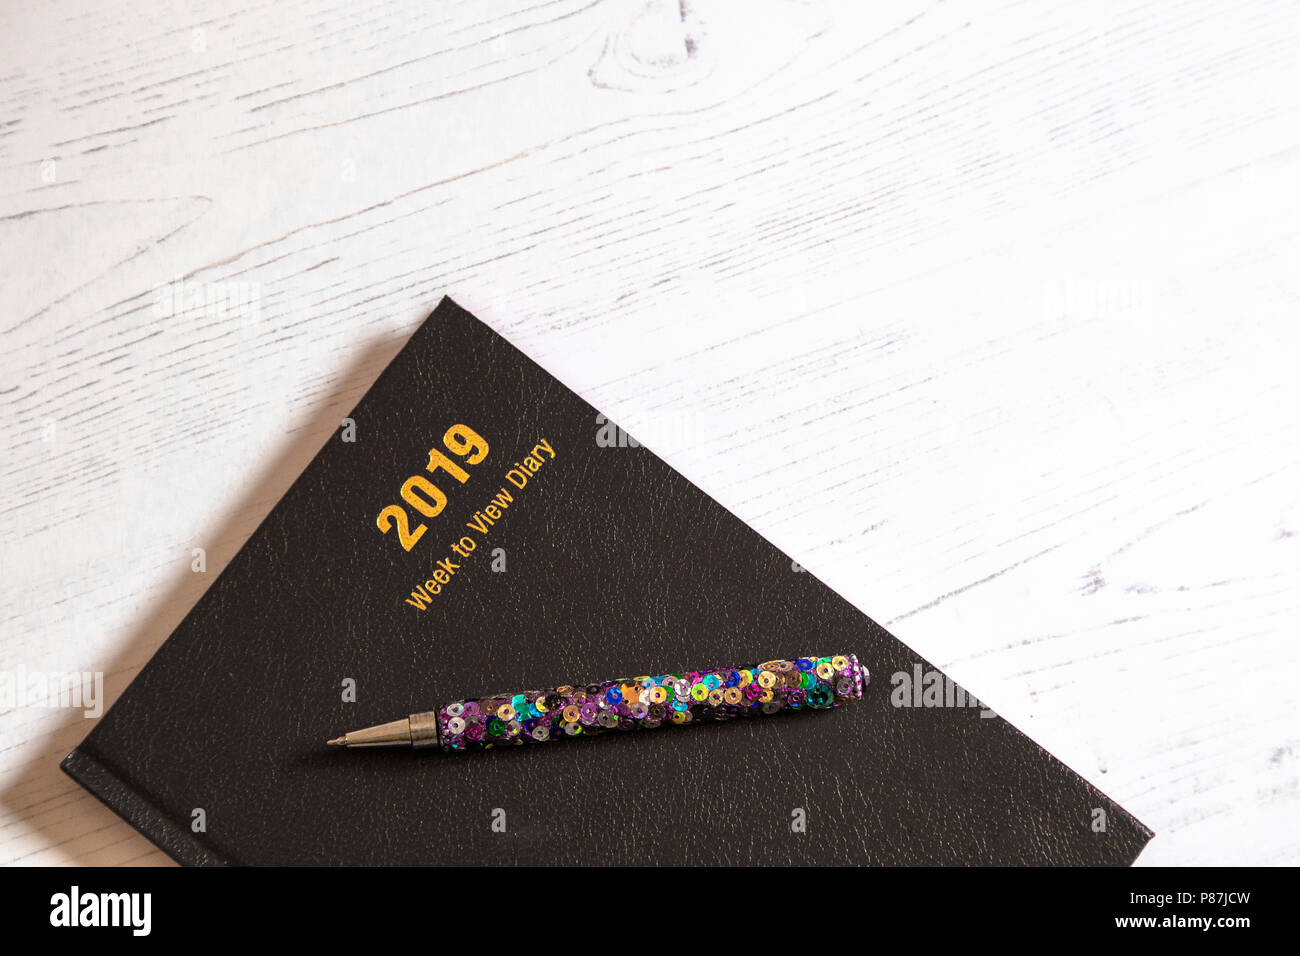 A 2019 desk diary with a pen. Stock Photo